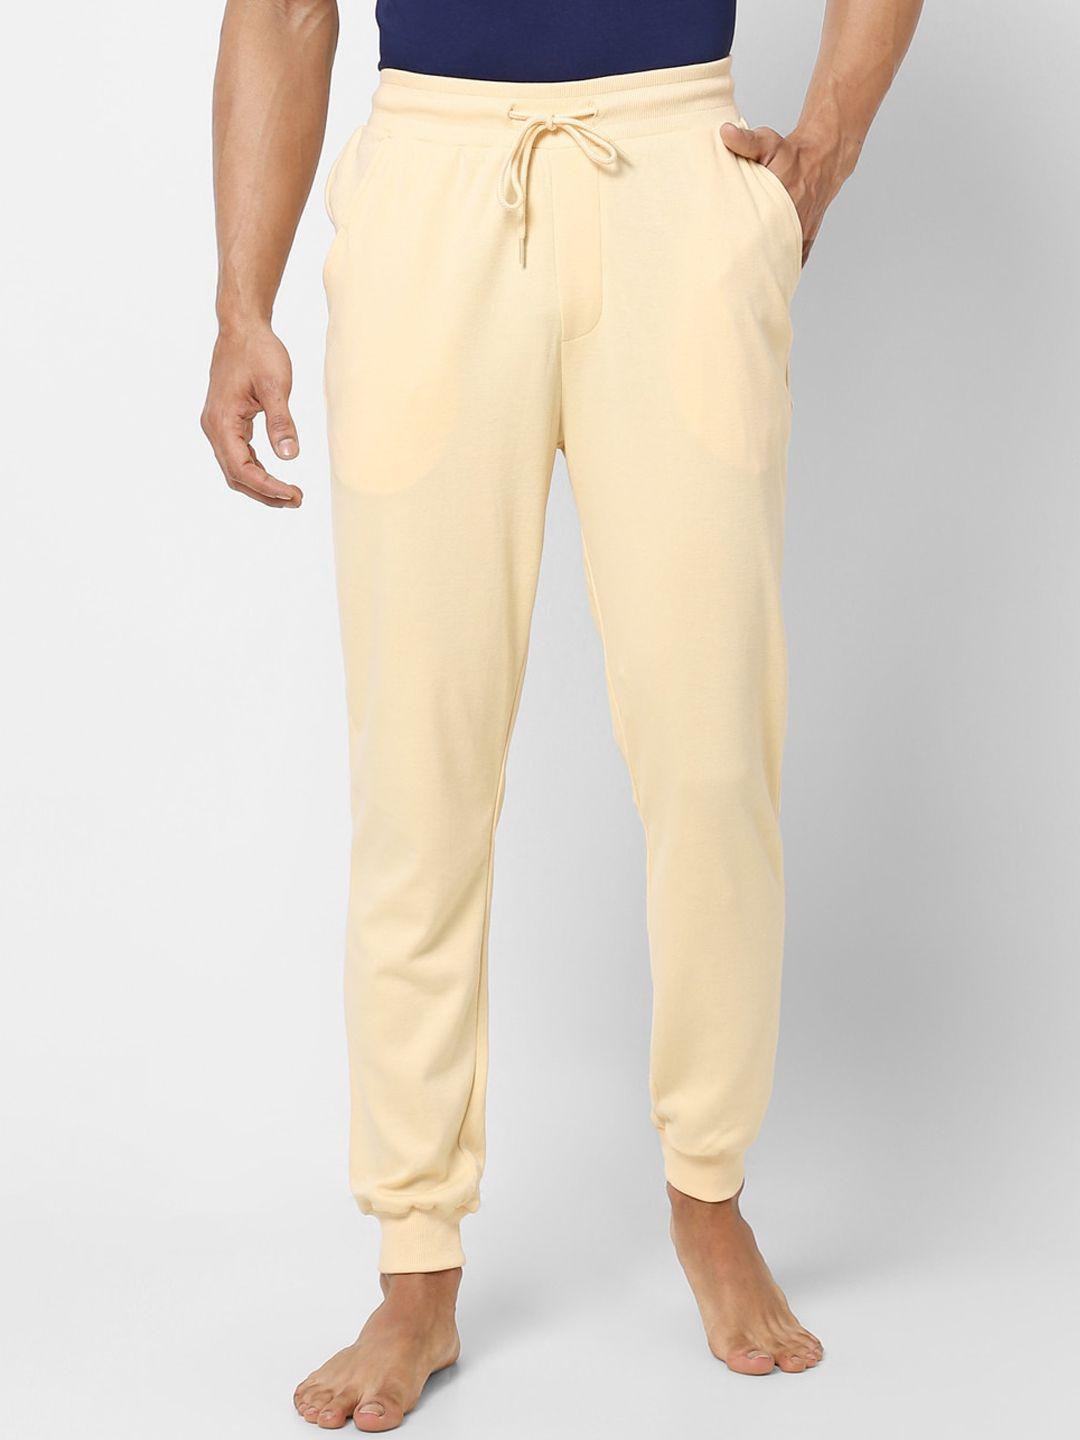 ajile-by-pantaloons-men-beige-solid-lounge-pants